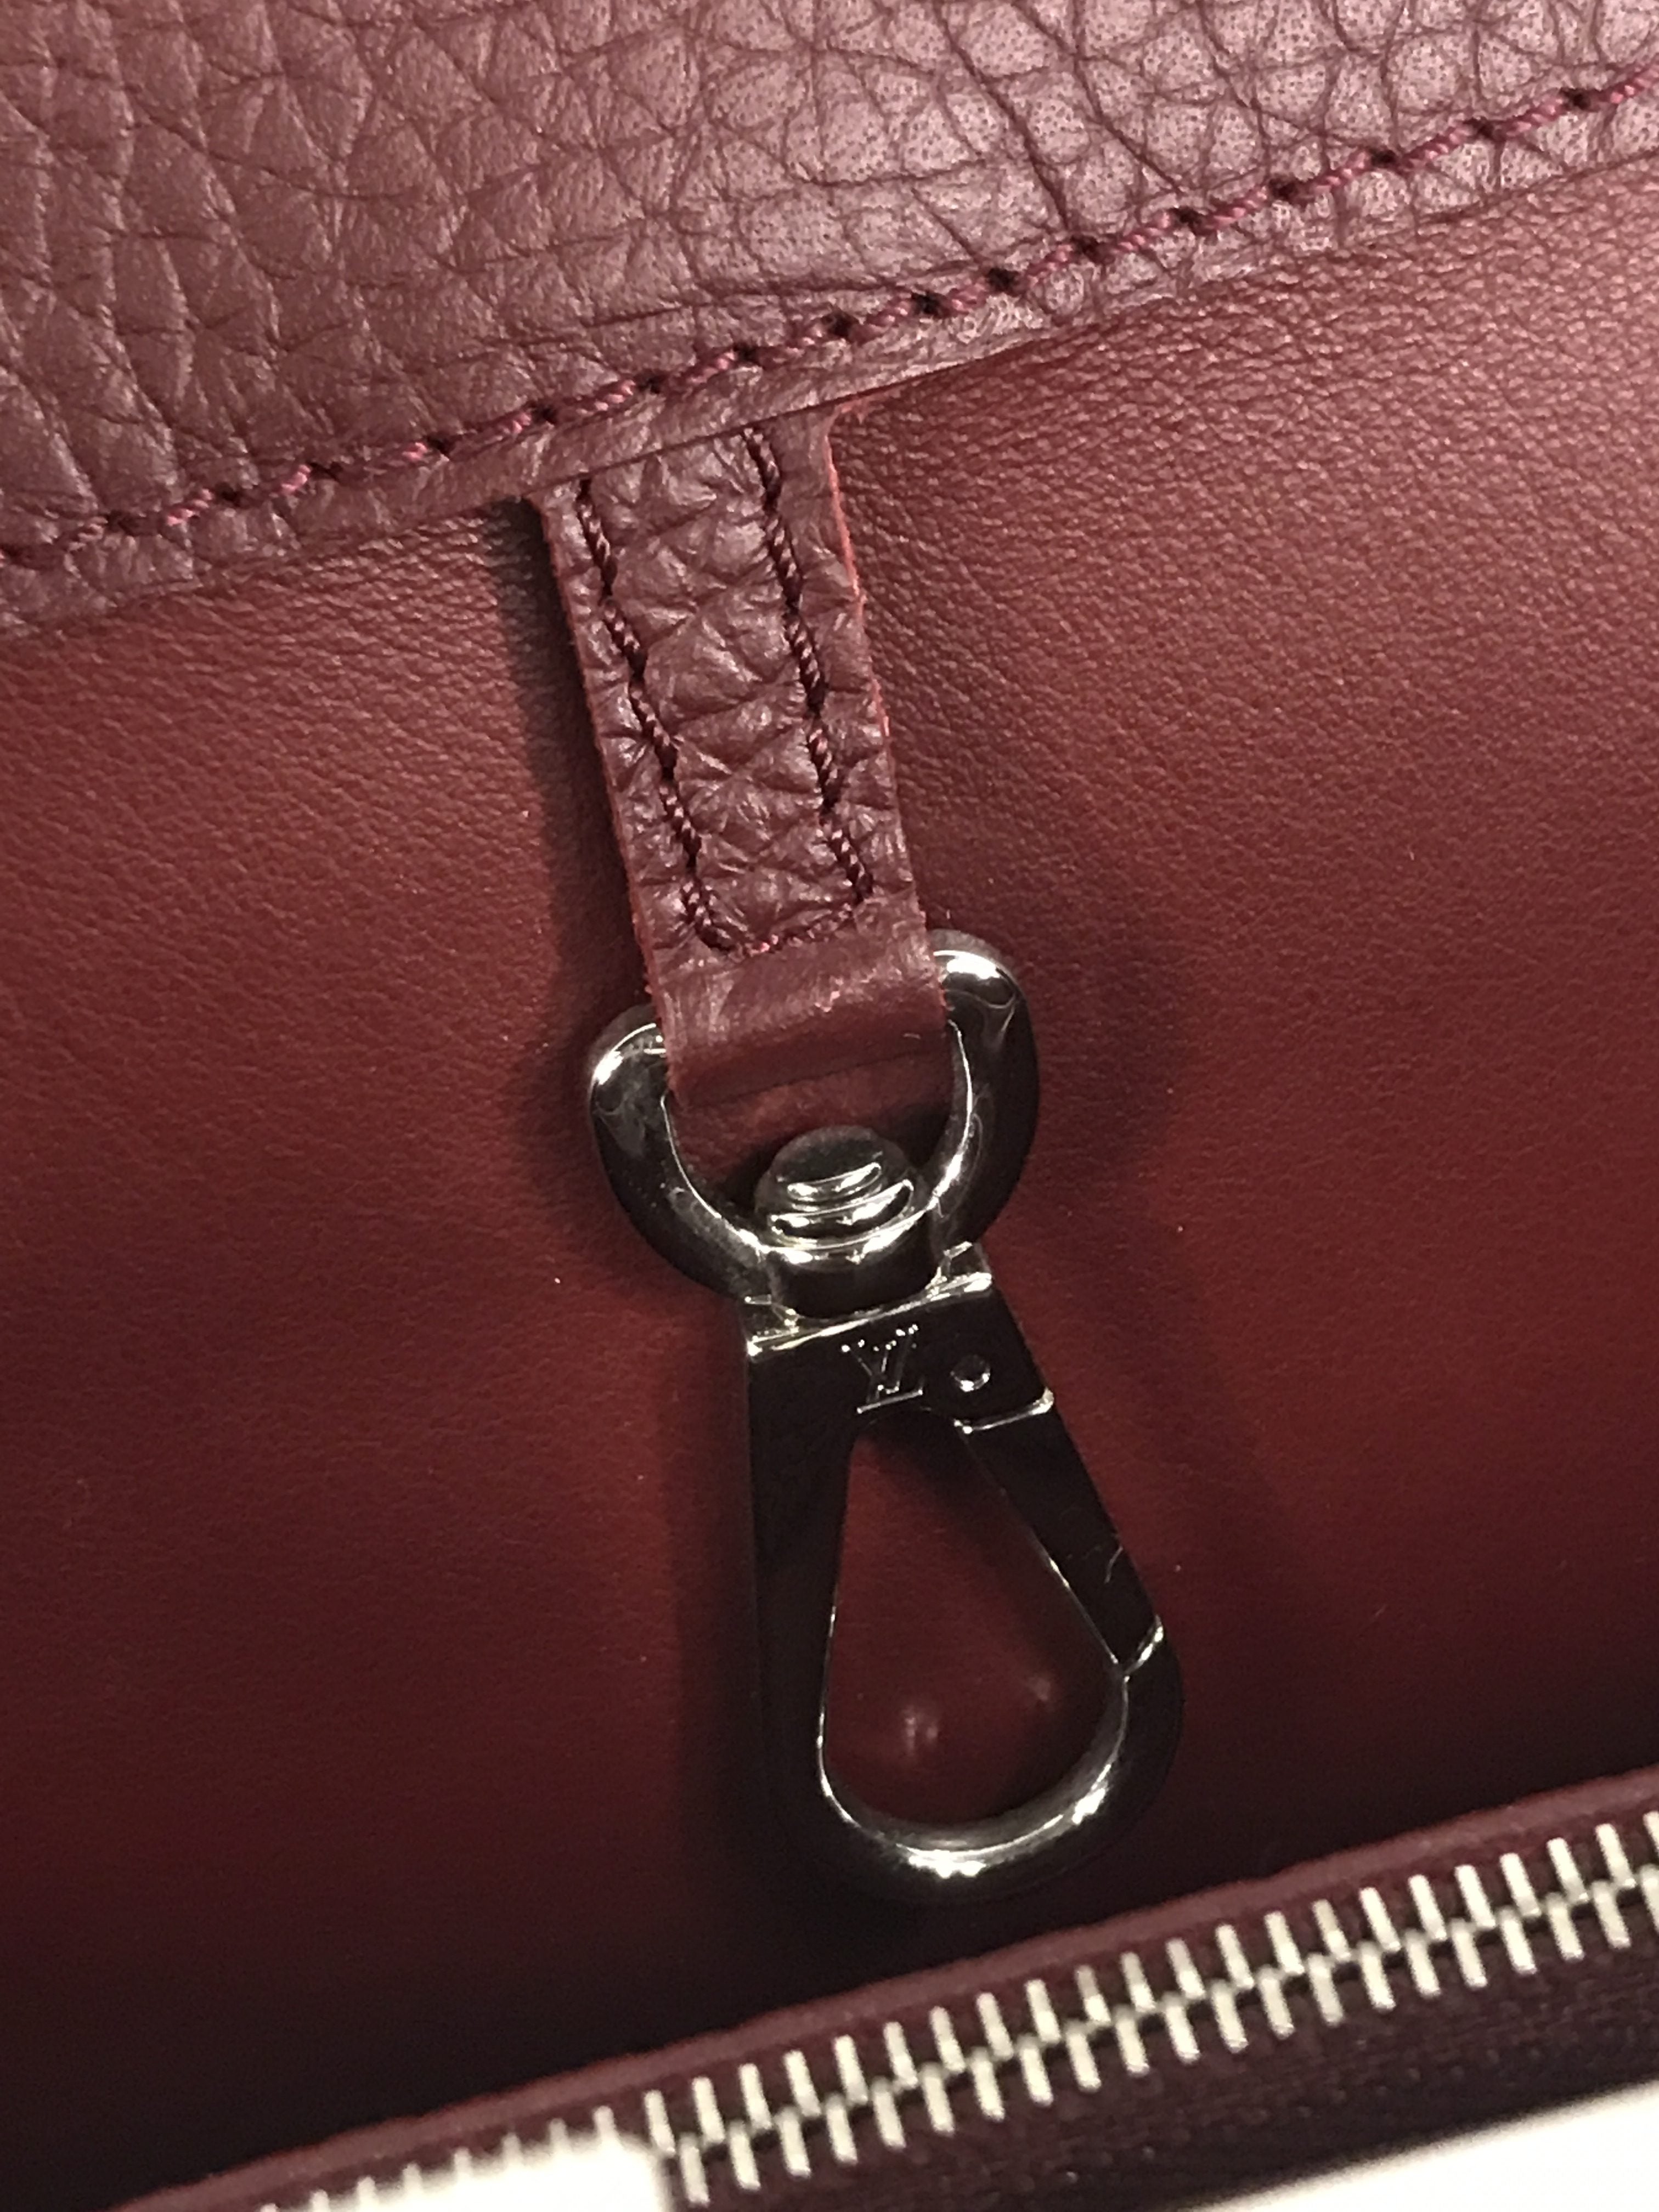 Burgundy Taurillon Leather w/Python Top Handle GM w/SHW